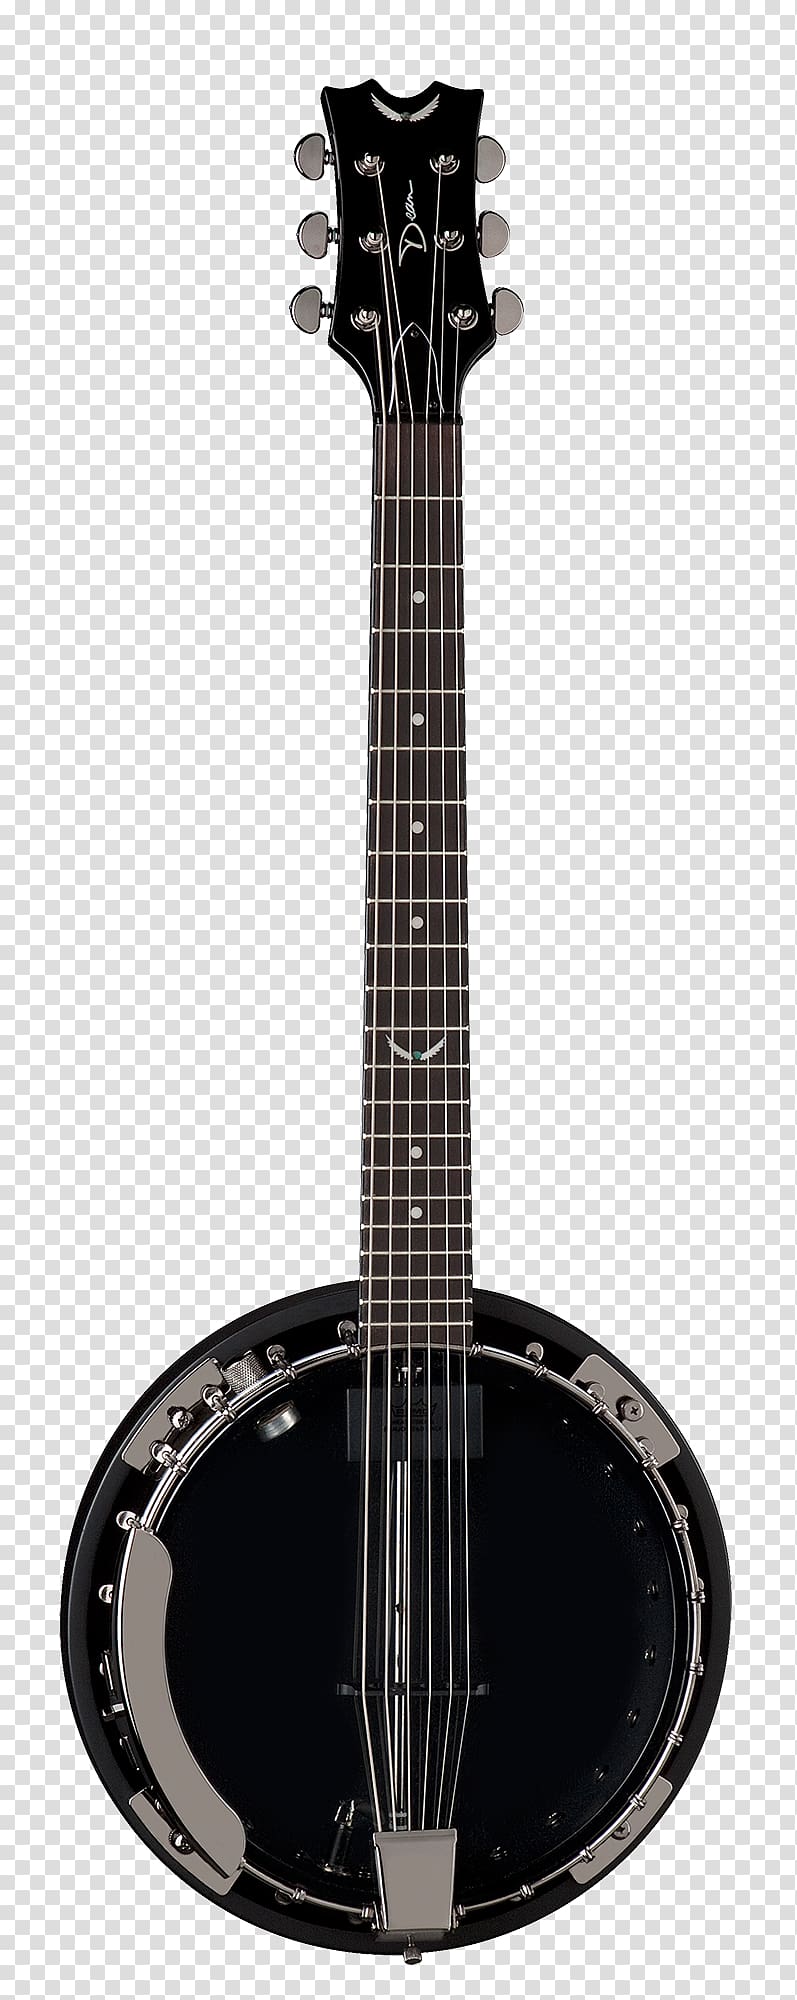 Resonator guitar Dean Guitars Banjo guitar Electric guitar, banjo transparent background PNG clipart